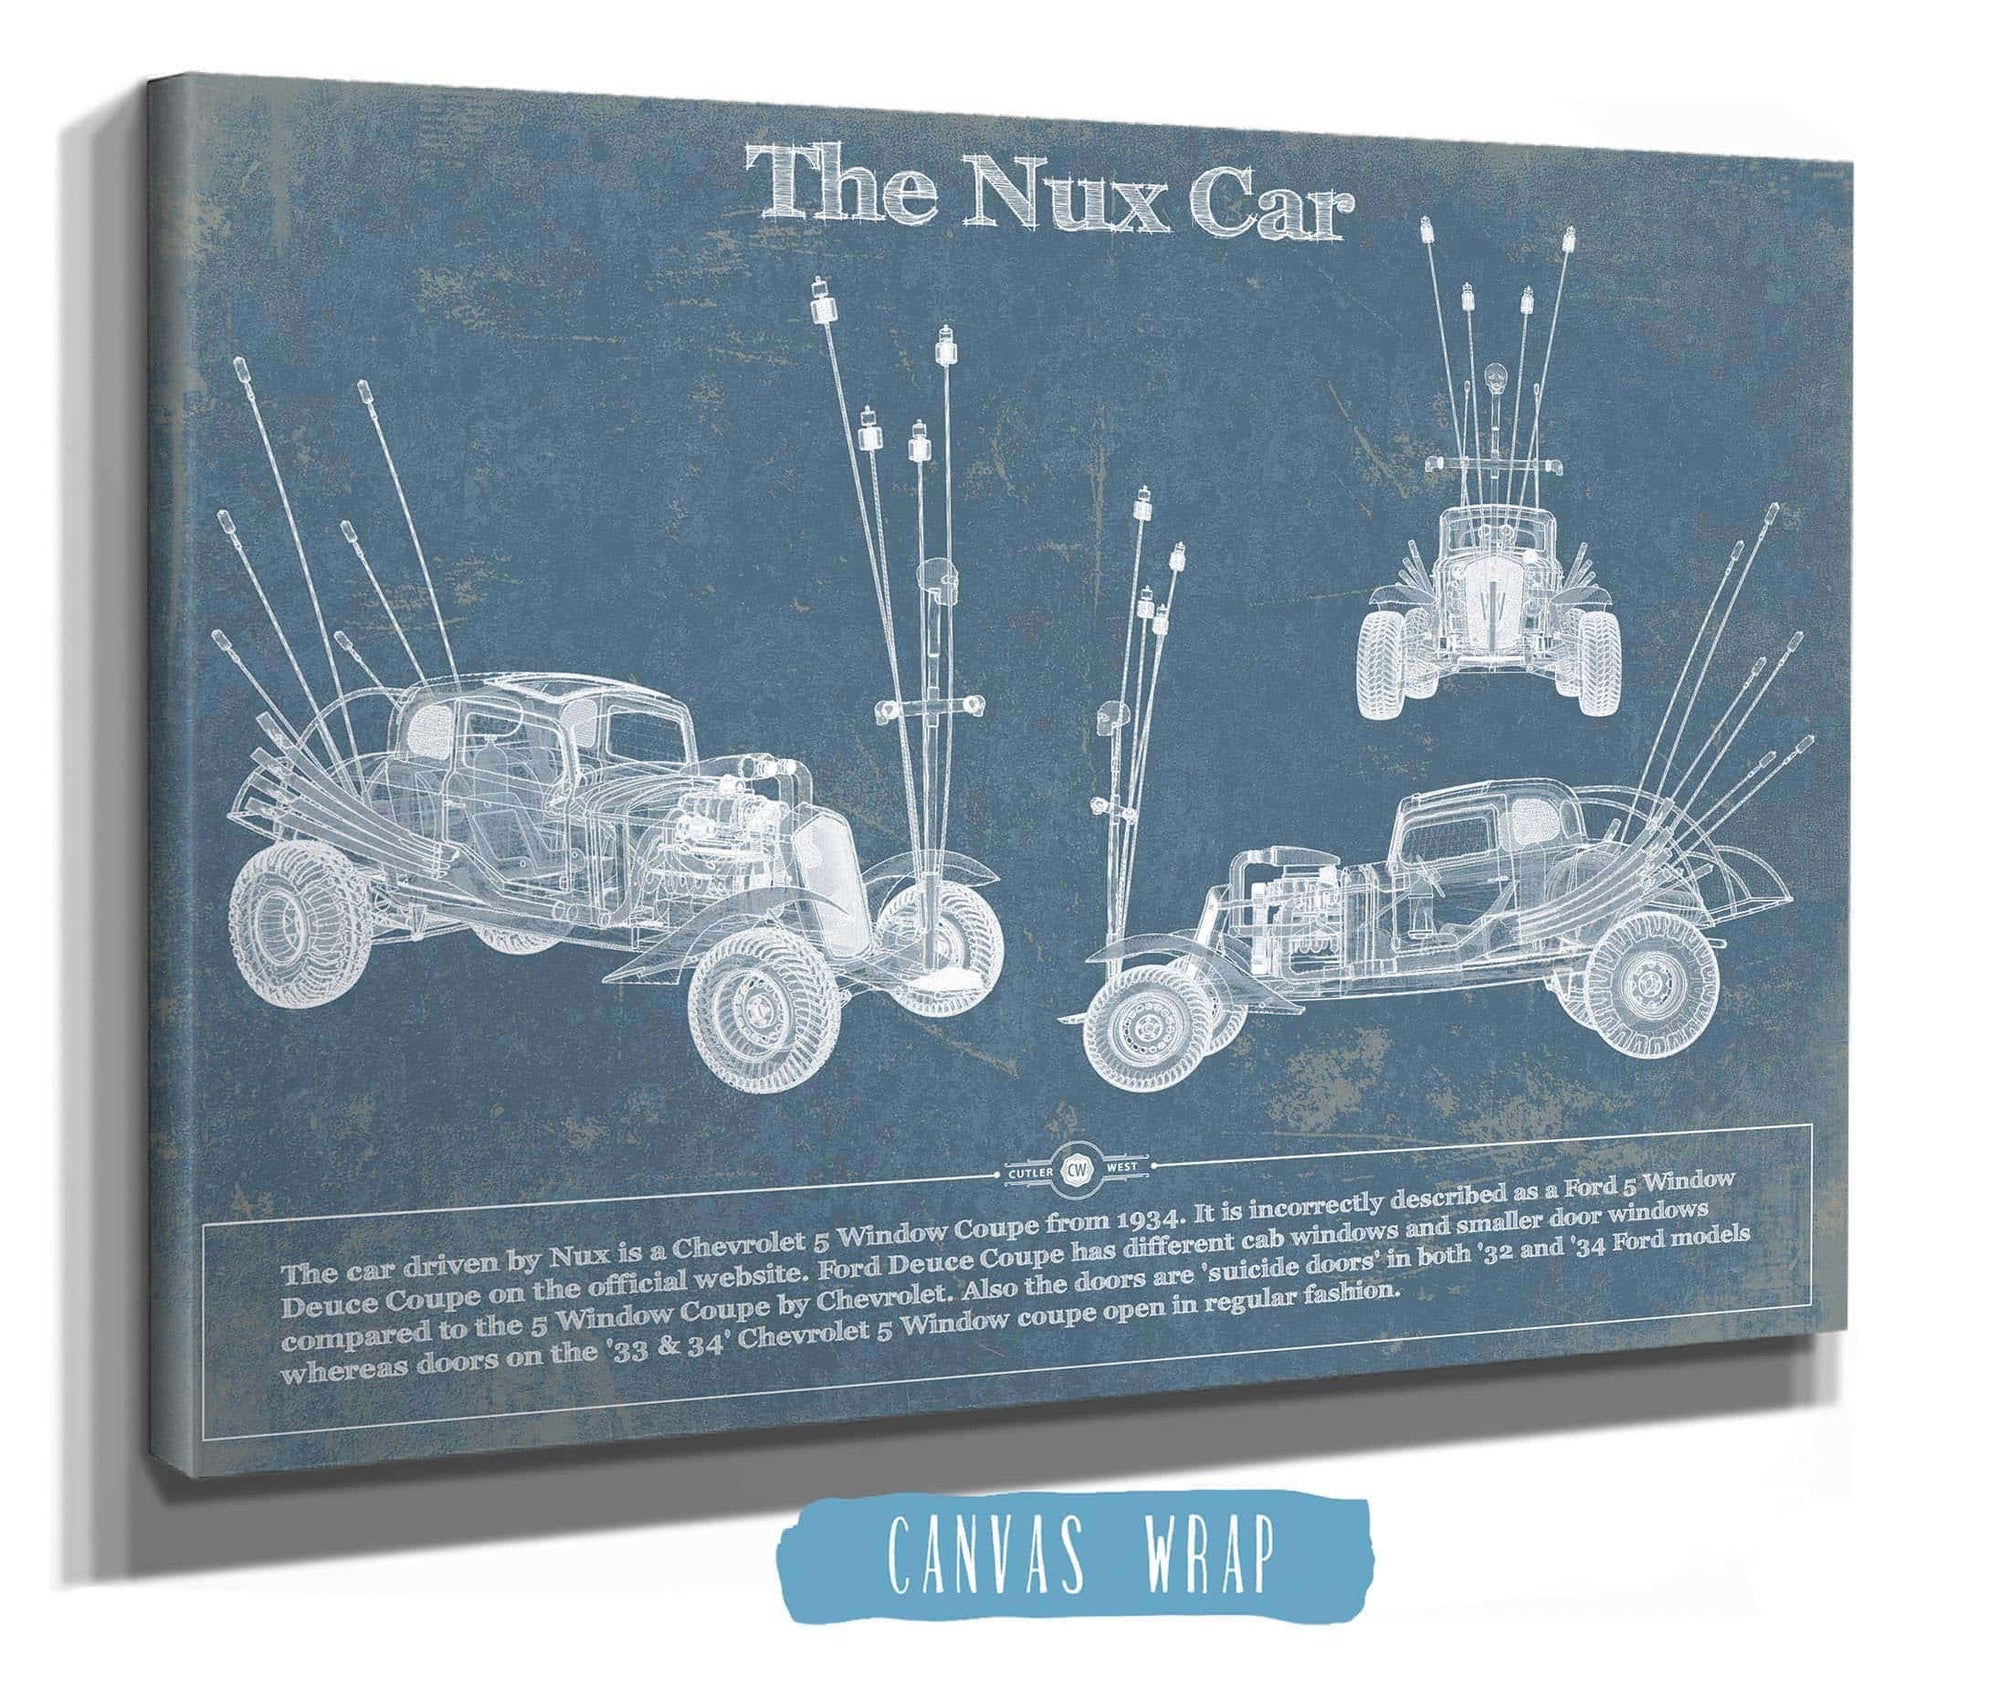 Cutler West Vehicle Collection The Nux Car (Chevrolet 5 Window Coupe 1934)  Blueprint Vintage Auto Print